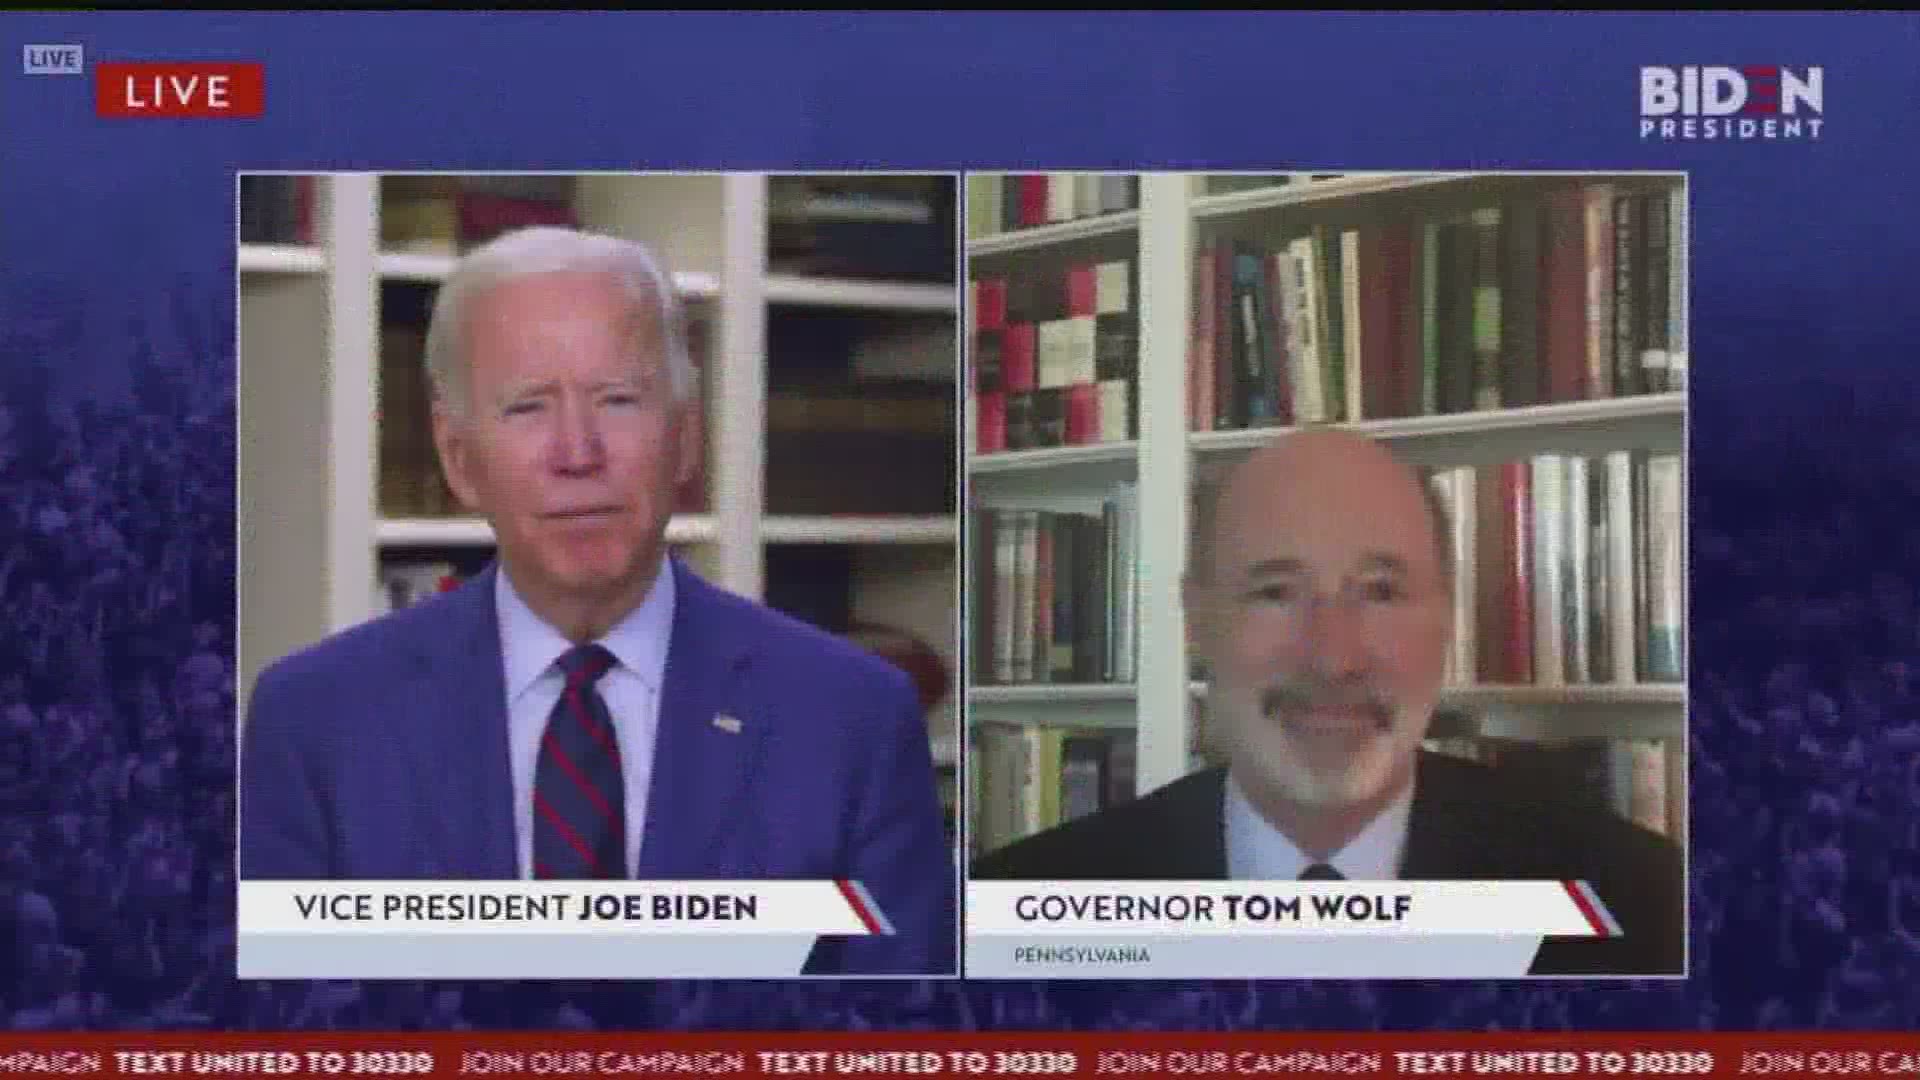 Governor Tom Wolf announced his endorsement of Joe Biden the same day both spoke remotely regarding the COVID-19 crisis